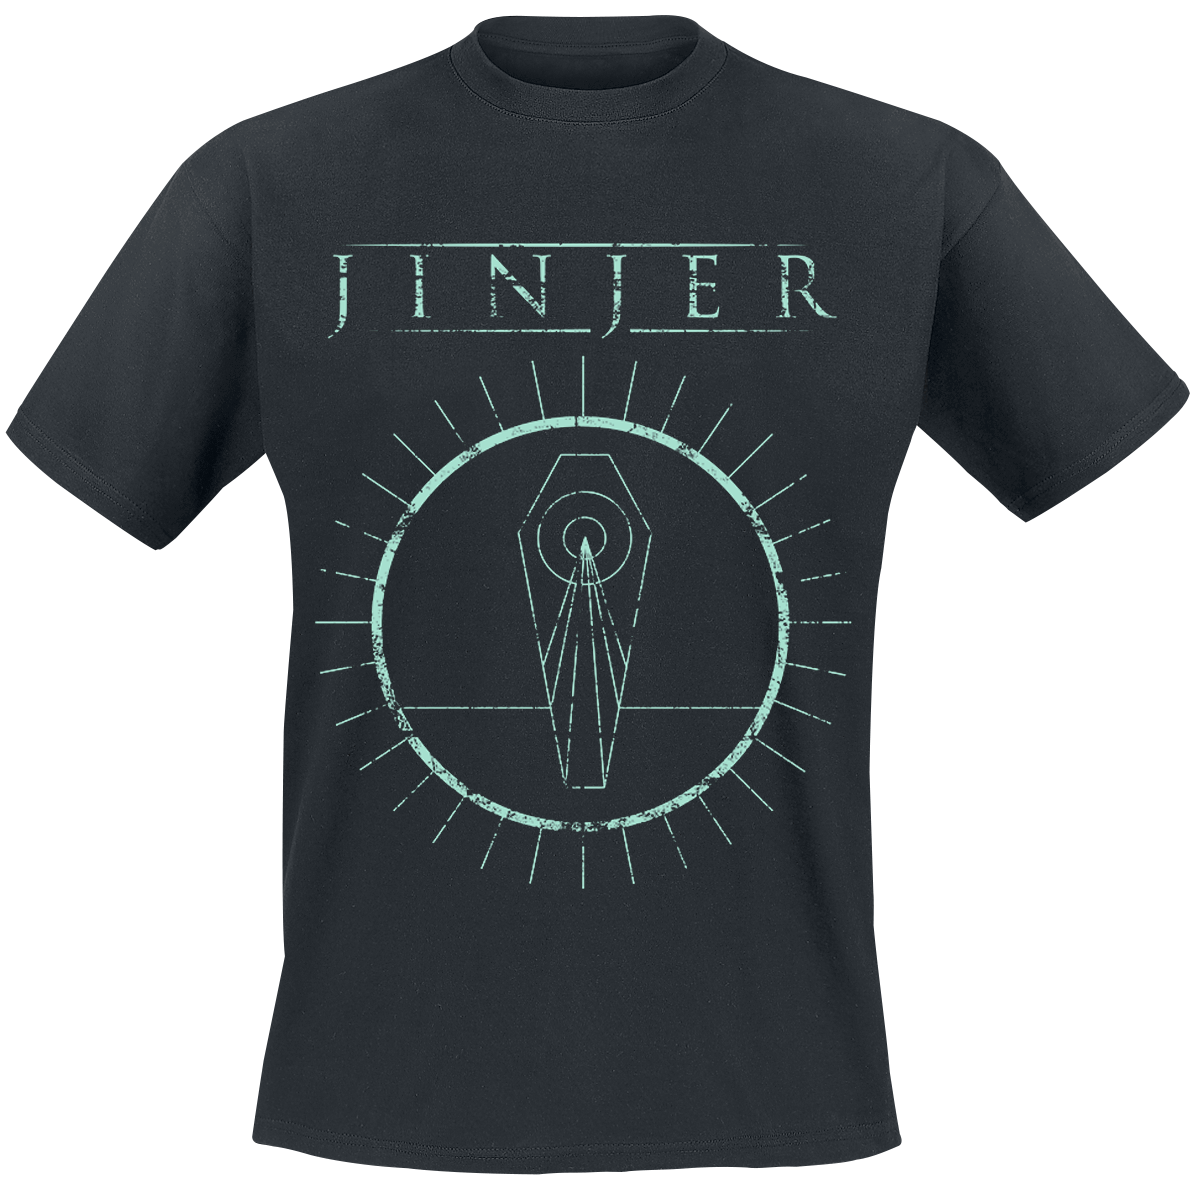 Jinjer - Pausing Death - T-Shirt - black image